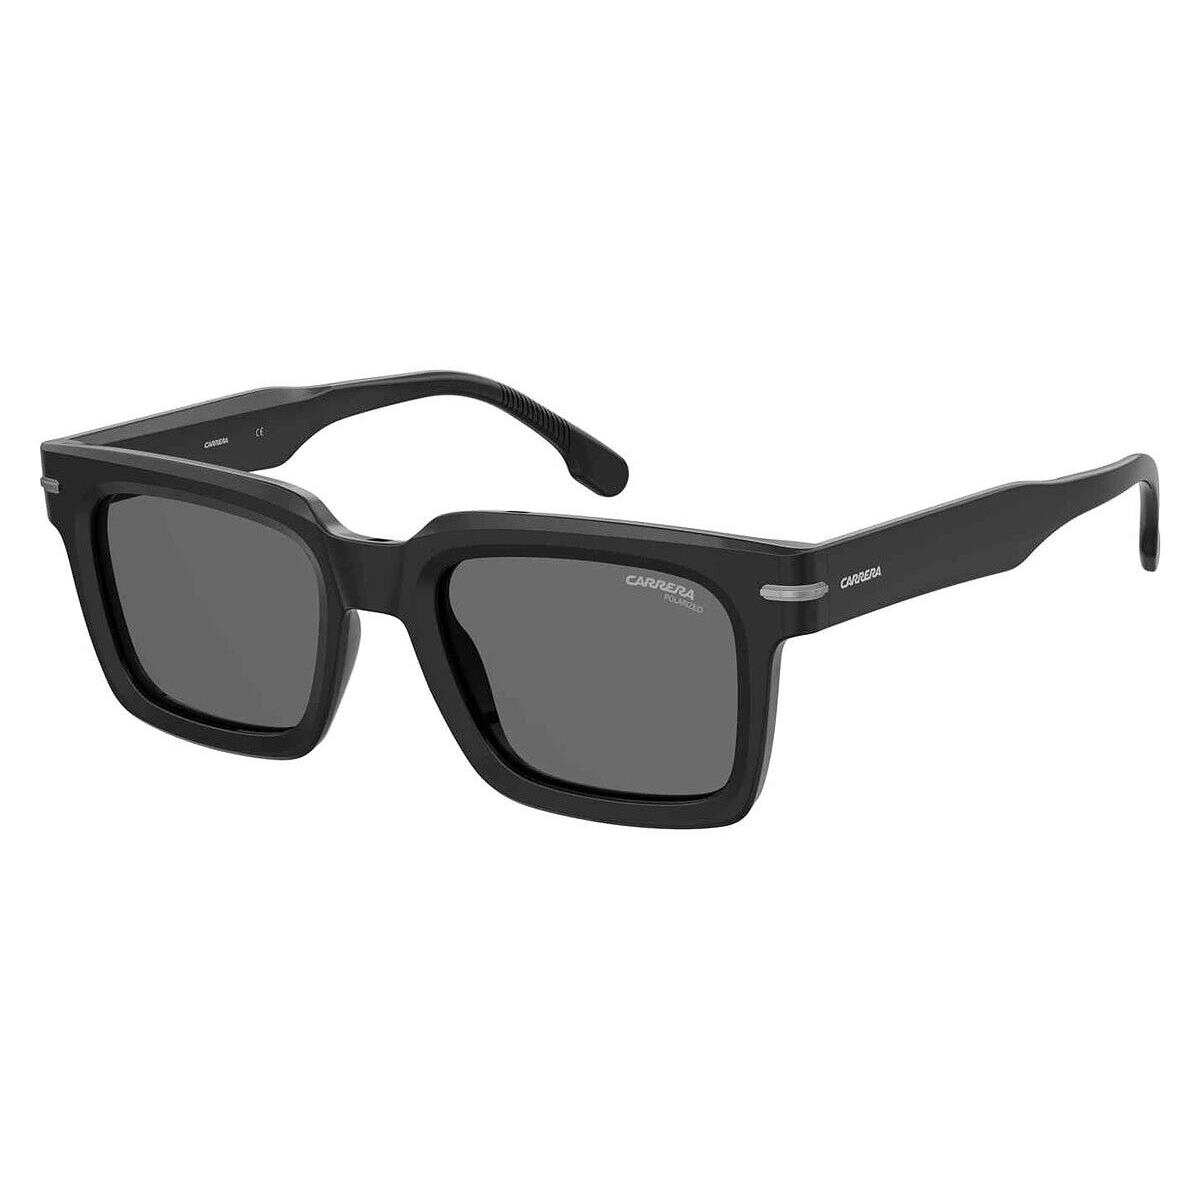 Carrera Car Sunglasses Men Black / Gray Polarized 52mm